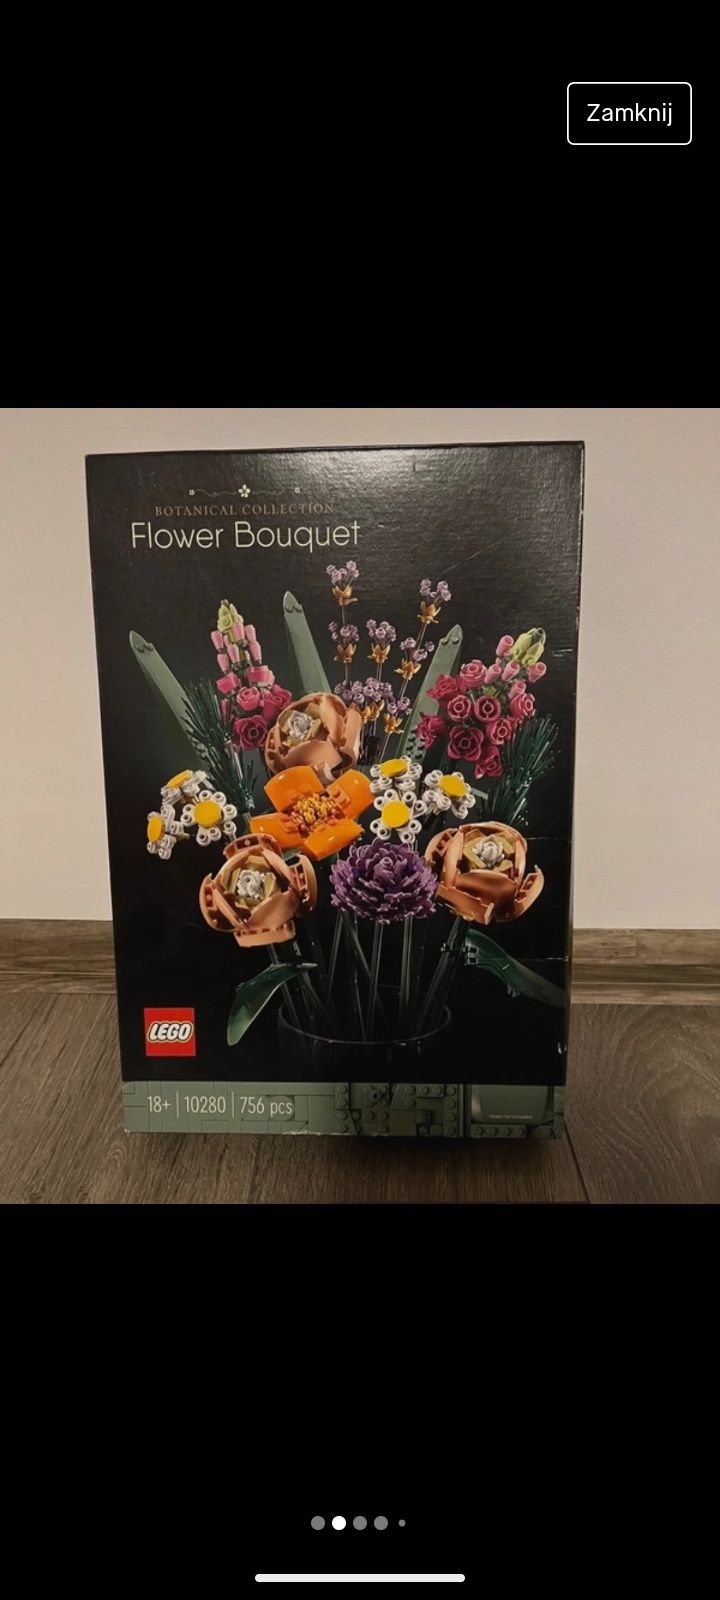 Lego kwiaty bukiet flower bouquet zestaw nowy